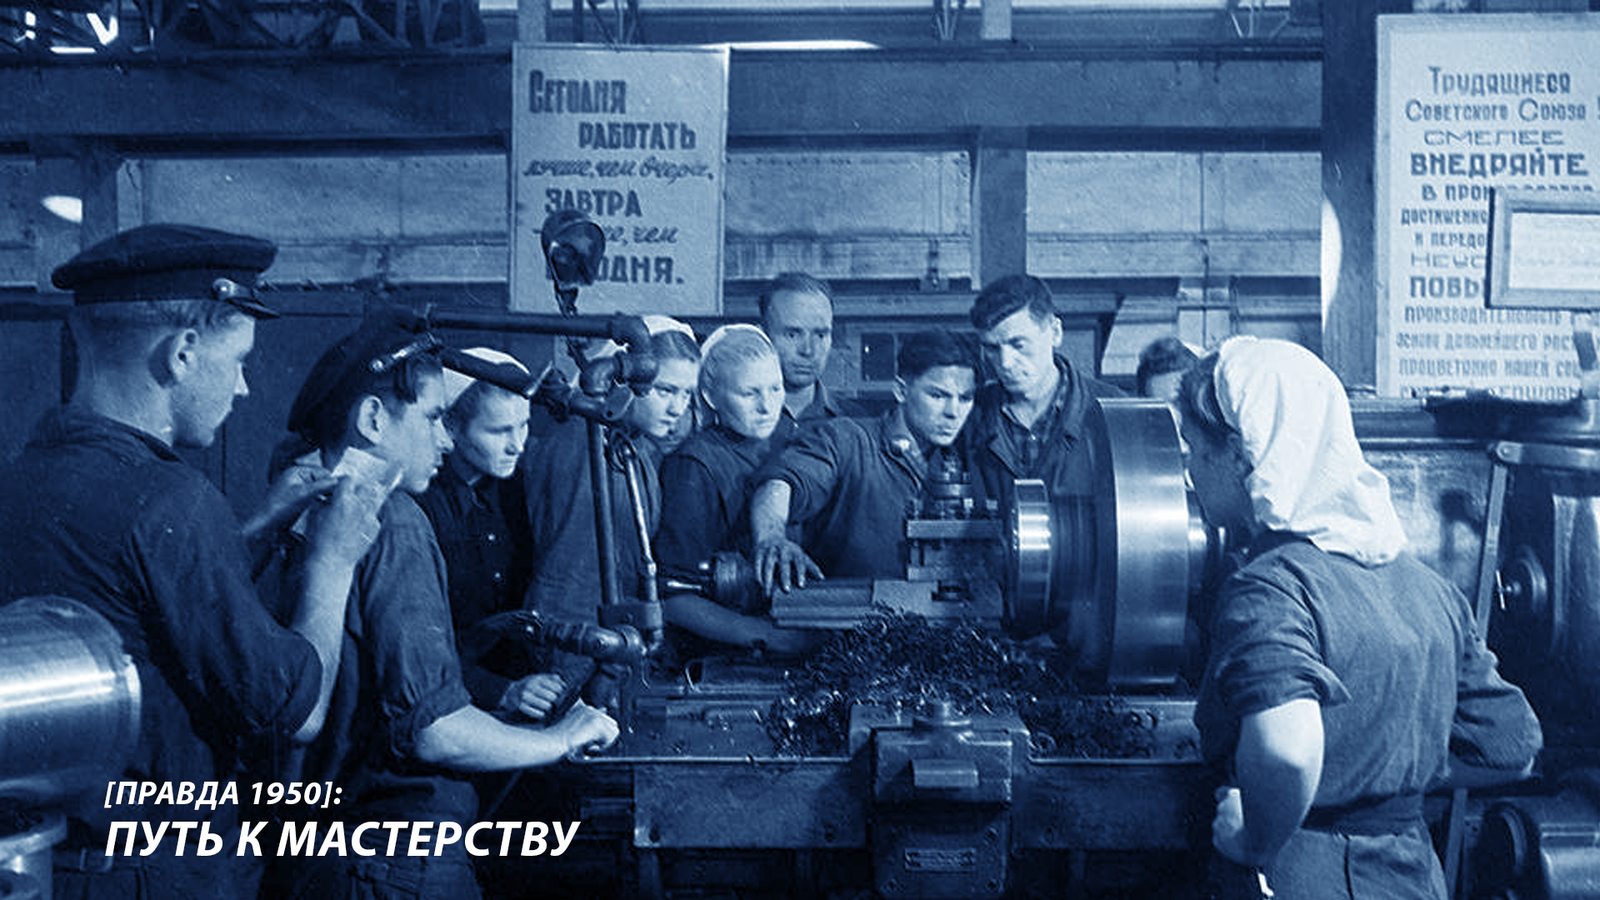 [Pravda 1950]: The Path to Mastery - Longpost, Socialism, Industry, Pravda newspaper, the USSR, 1950